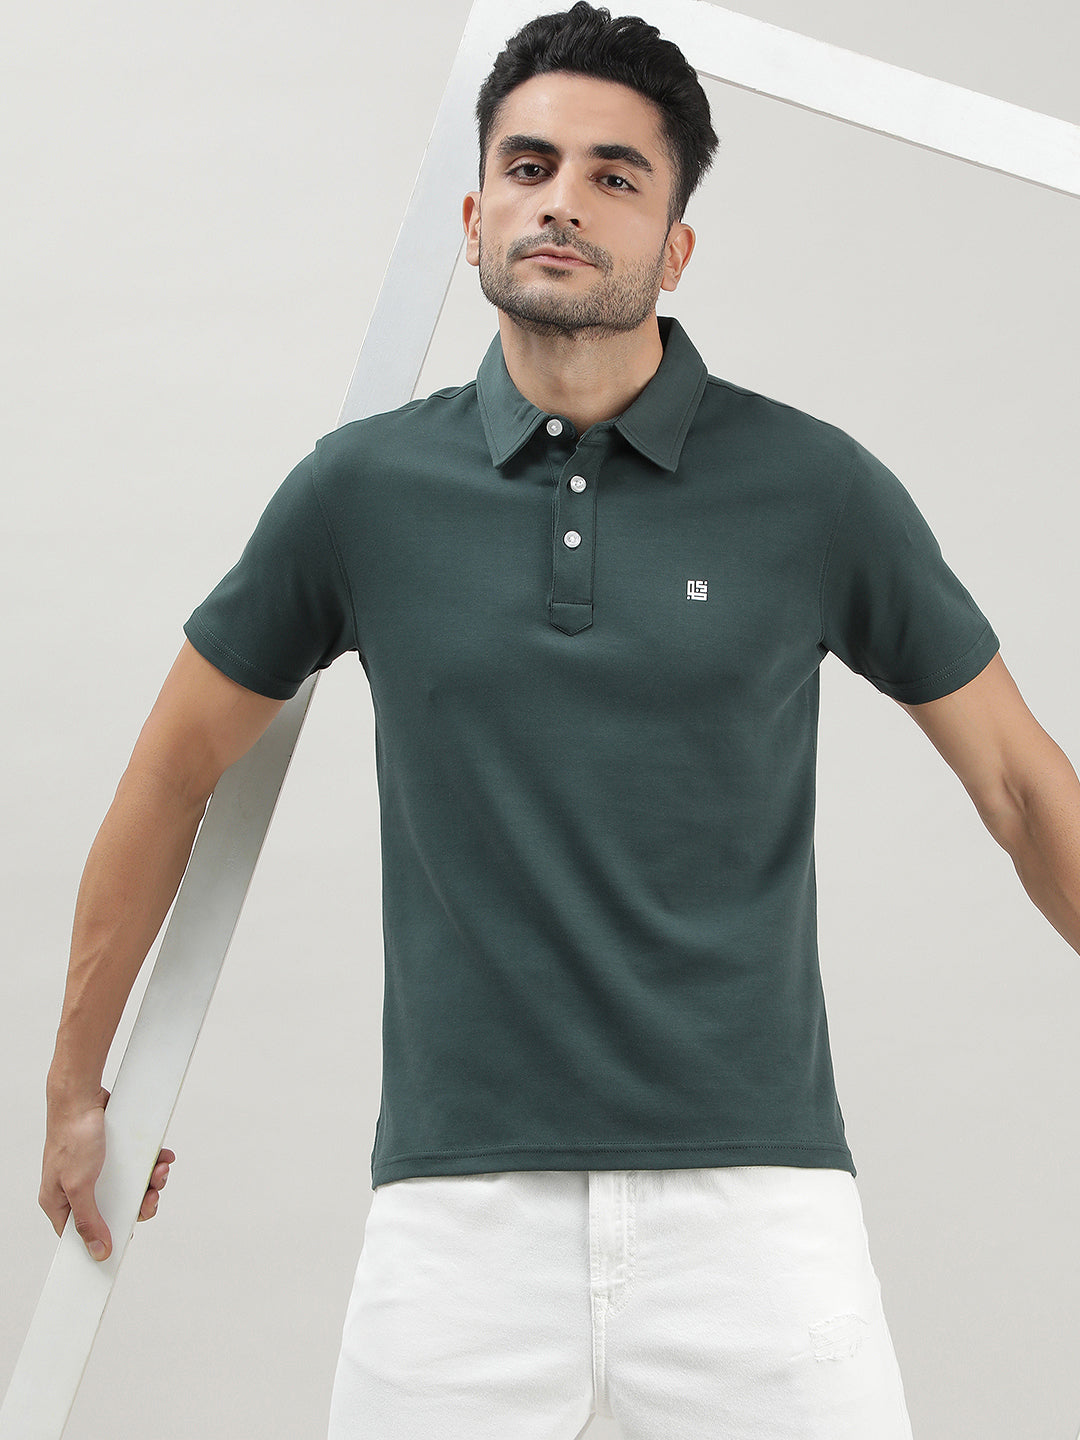 Green Polo T-shirt